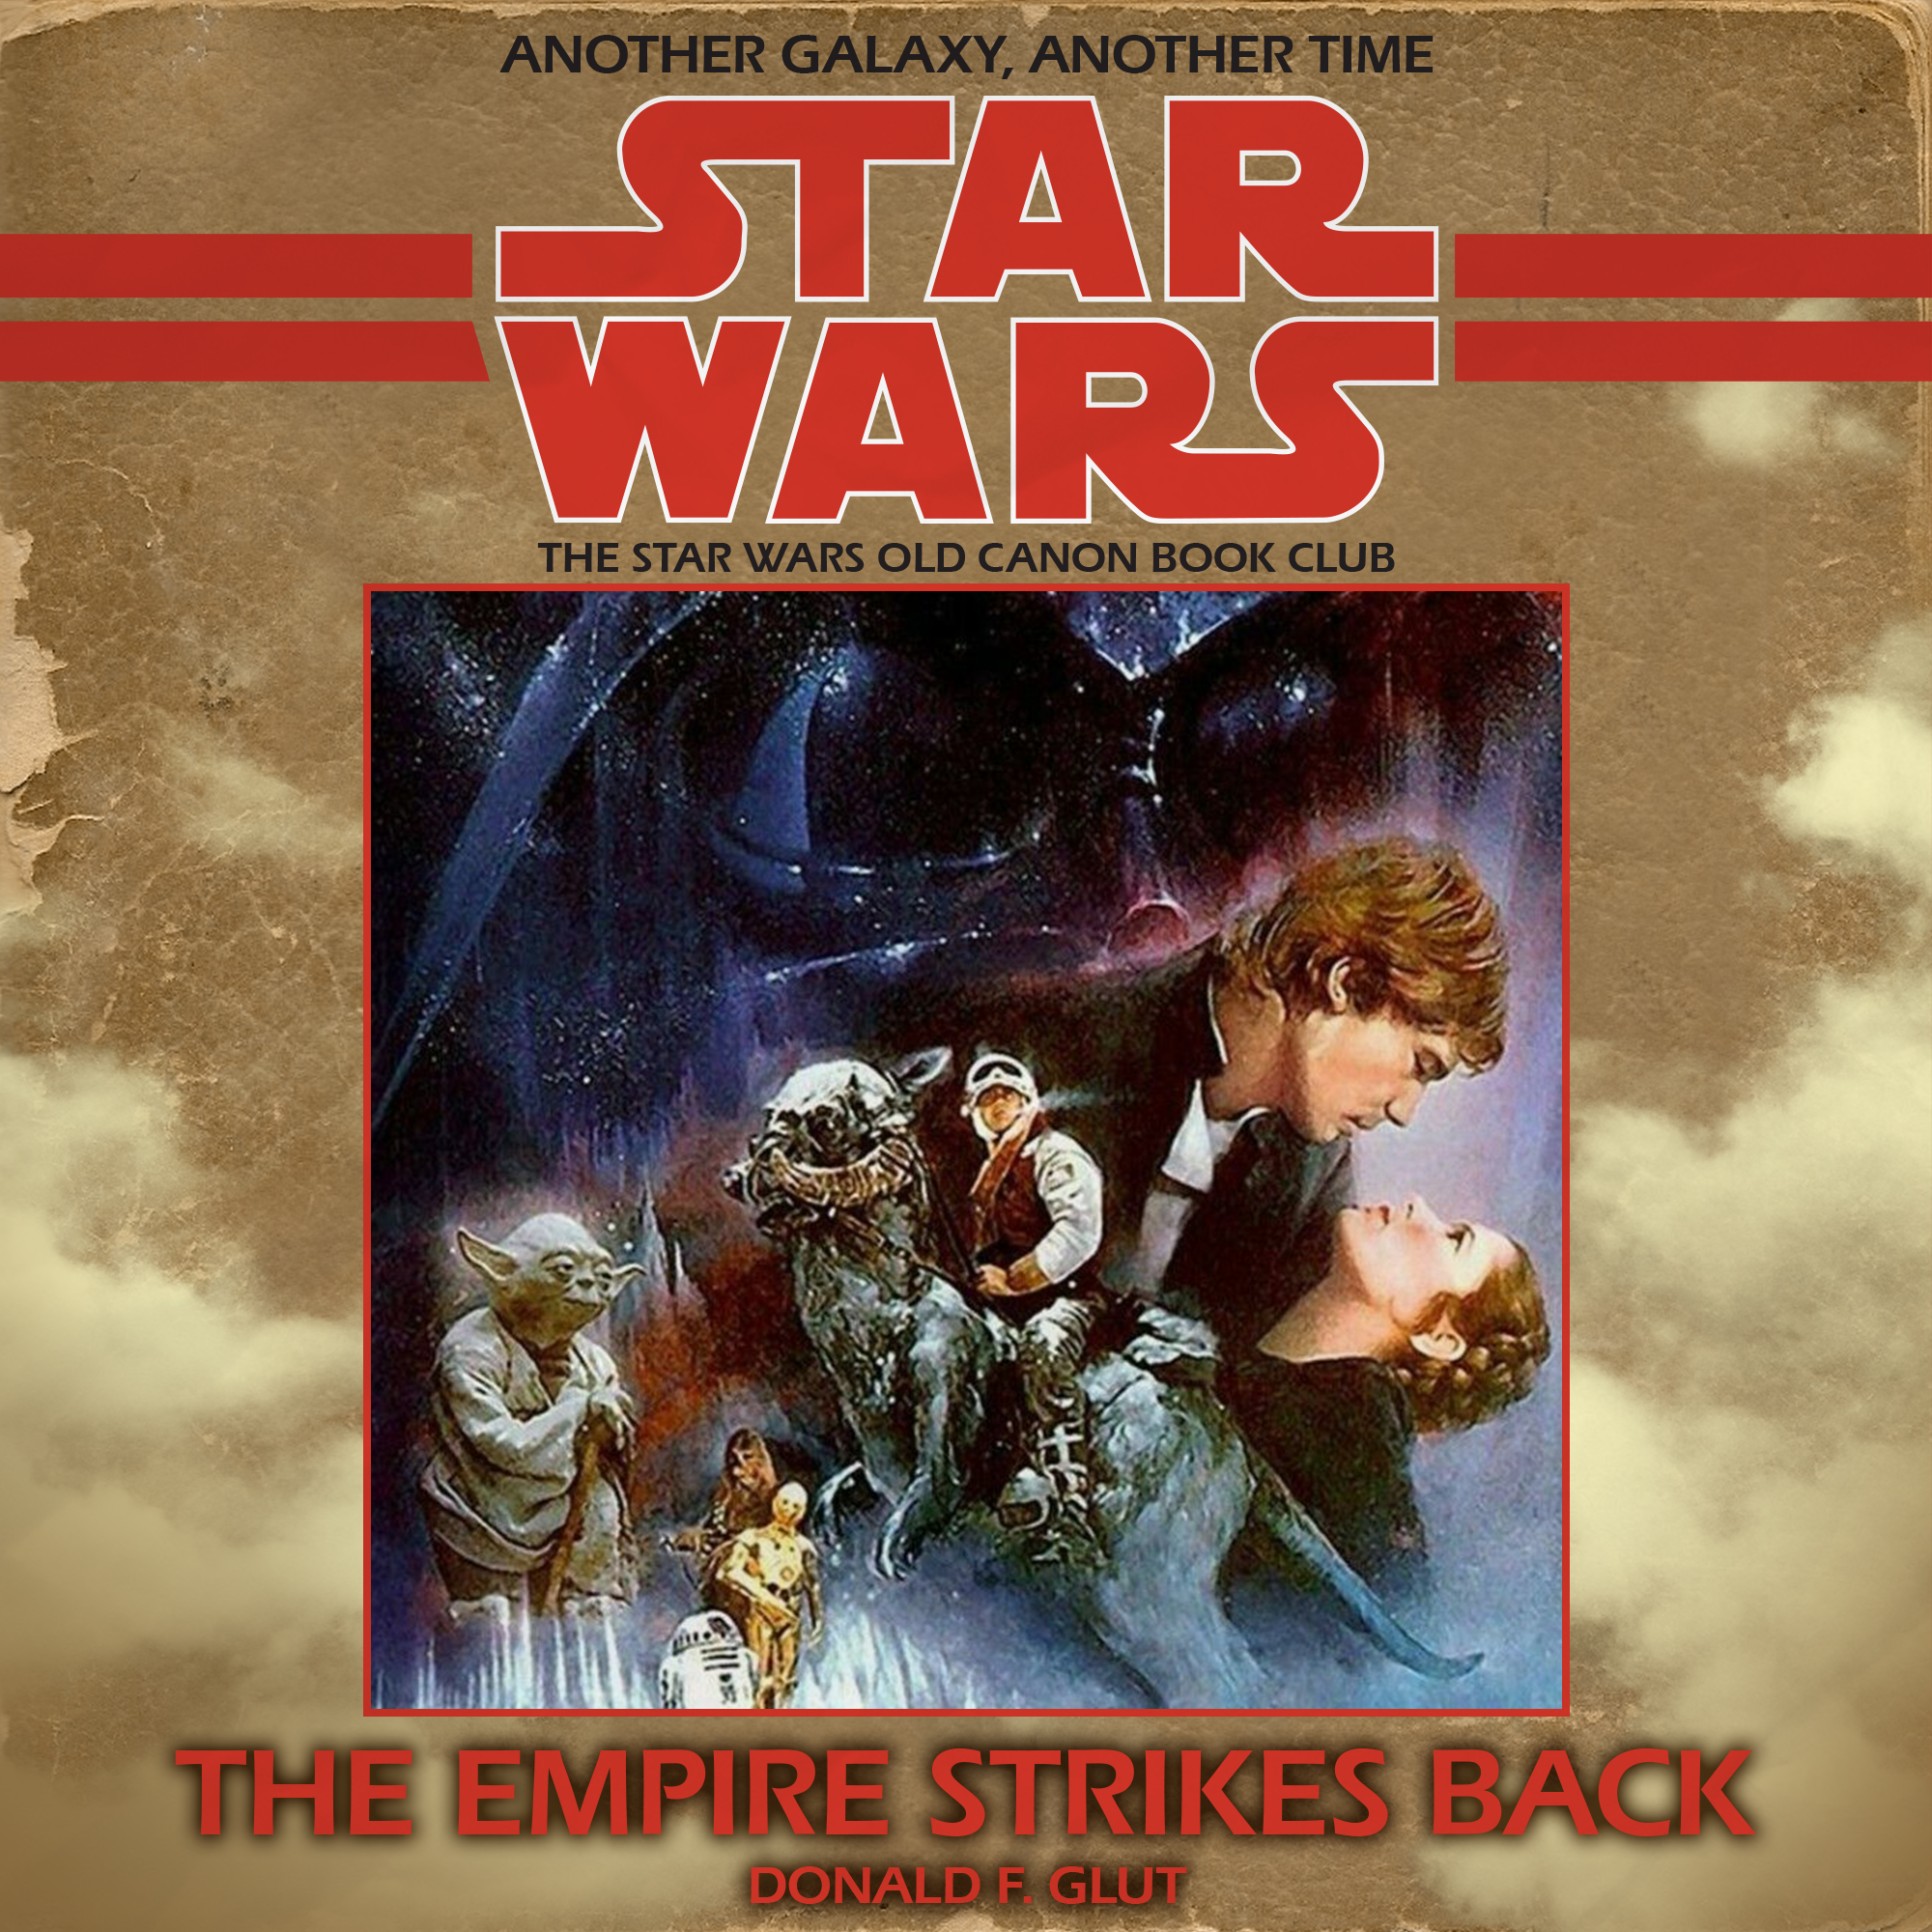 8: The Empire Strikes Back